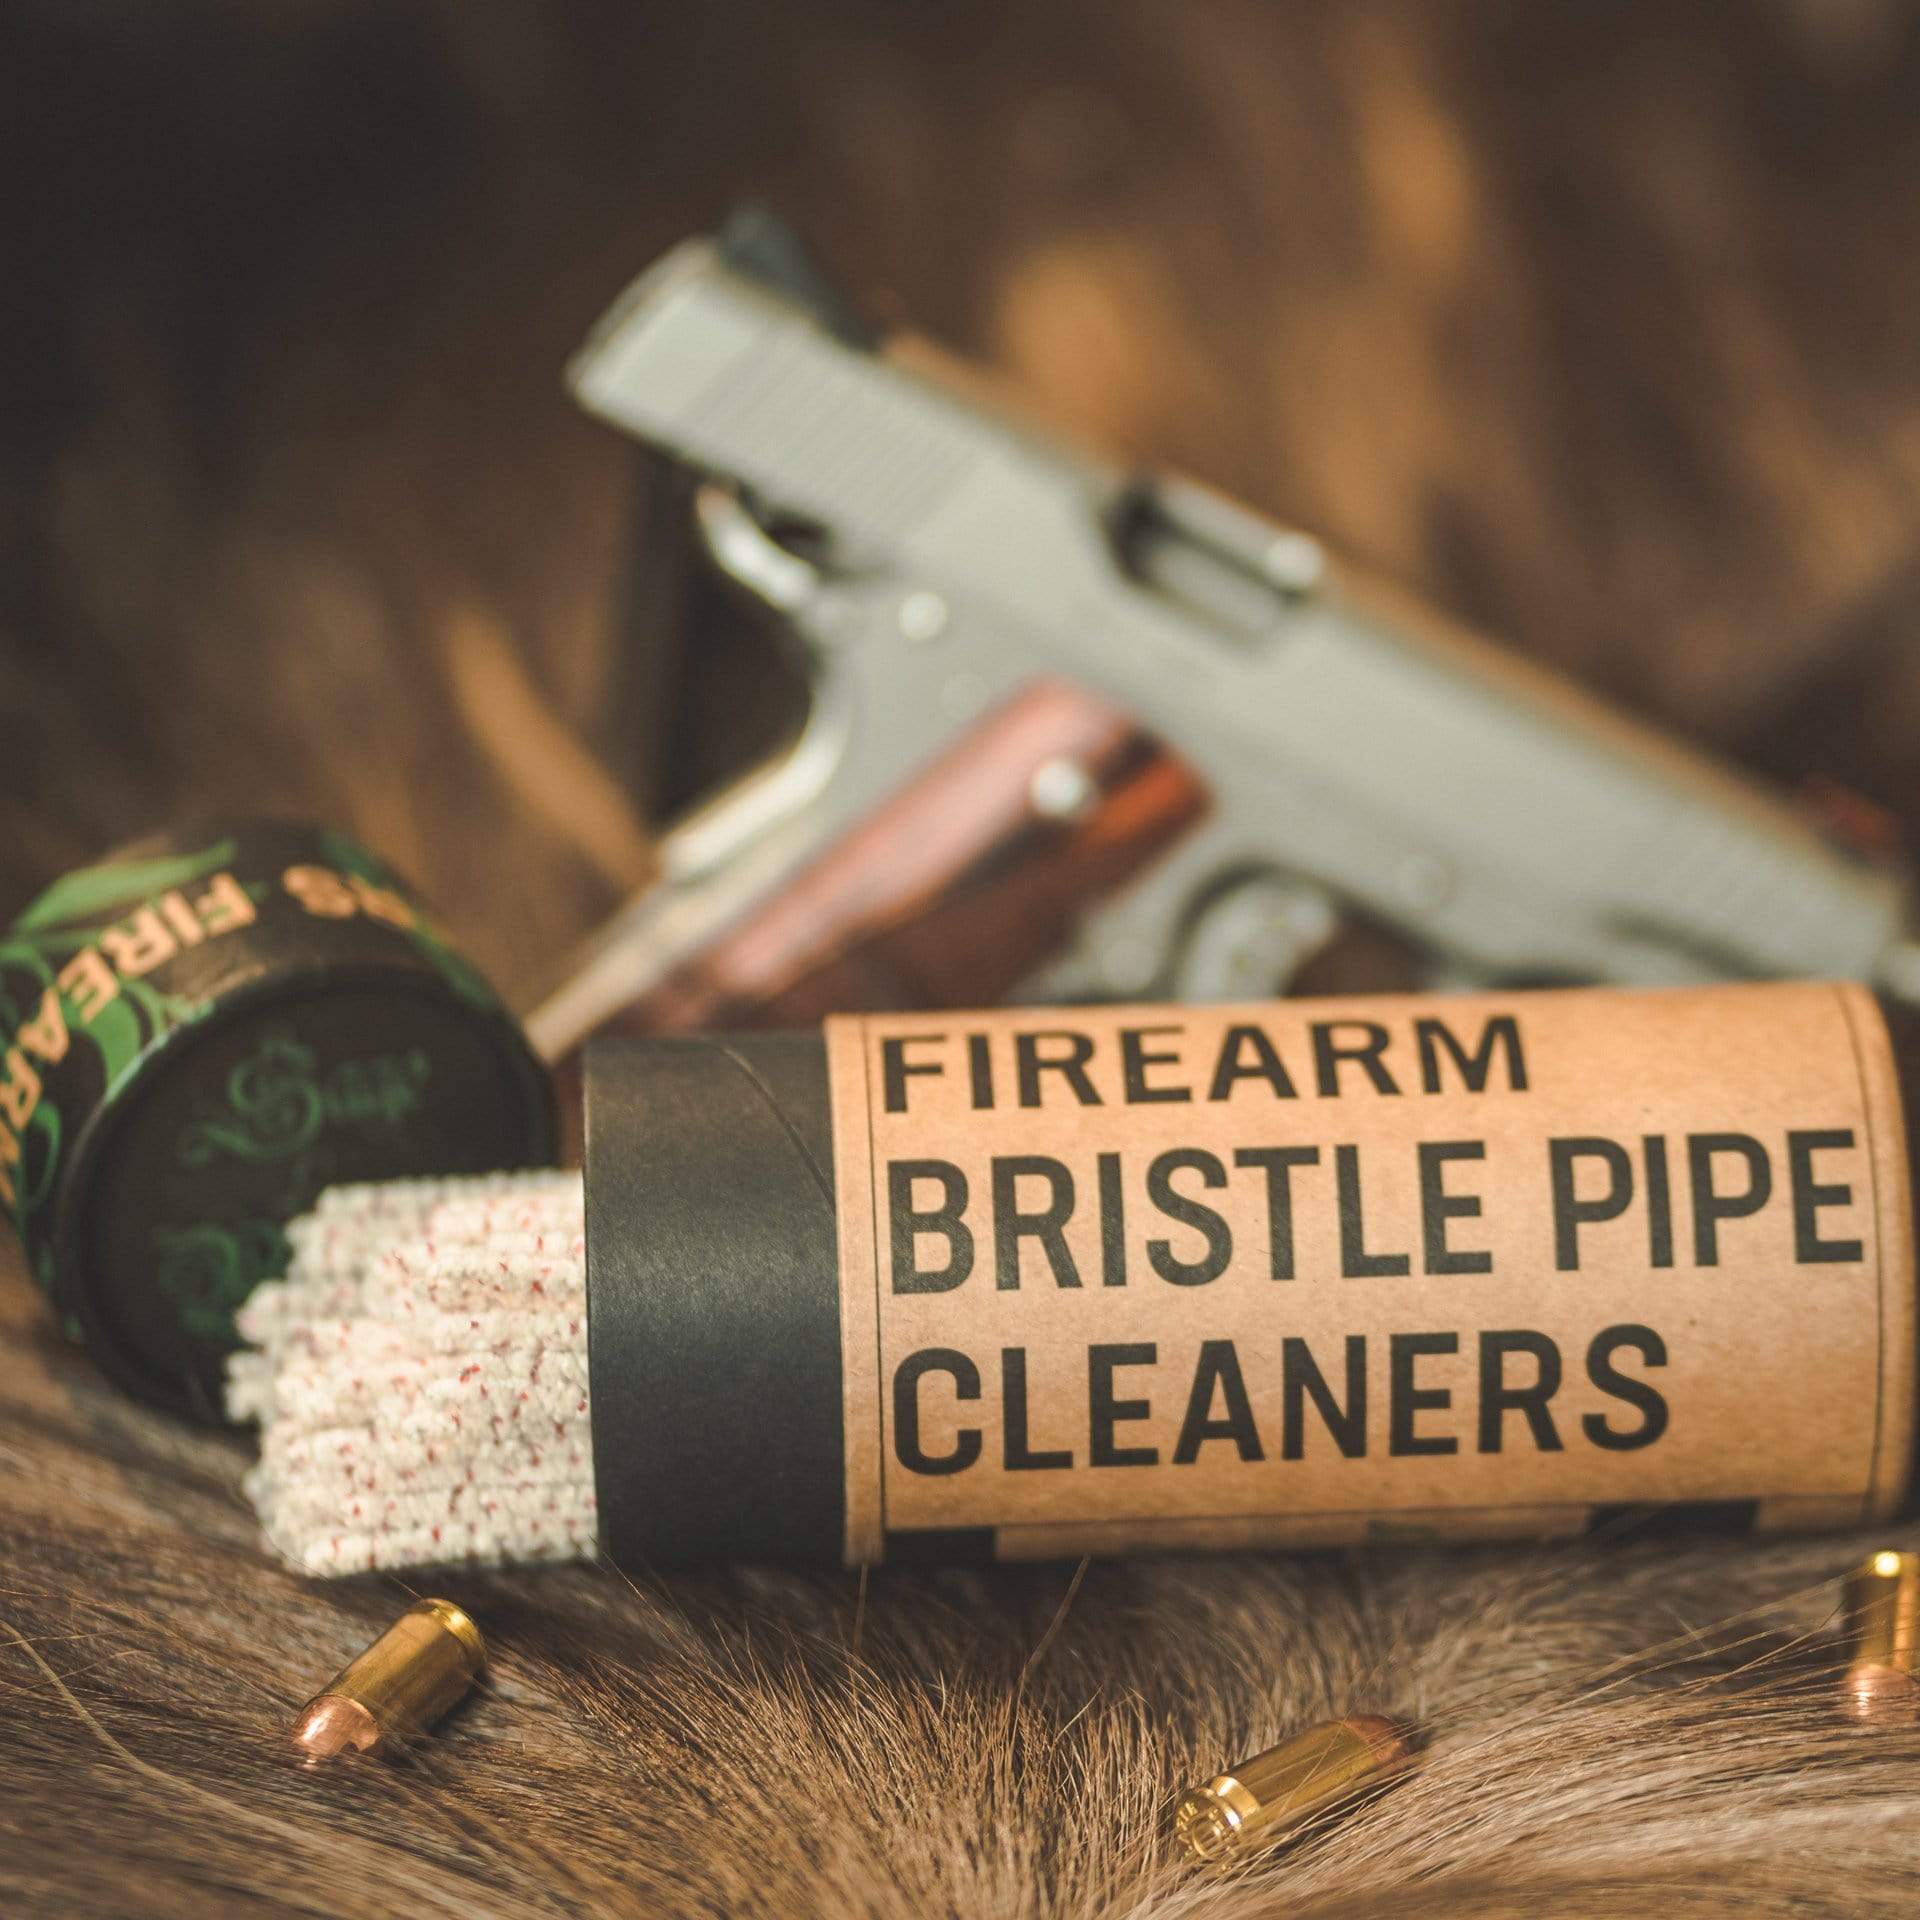 Firearm bristle pipe cleaners